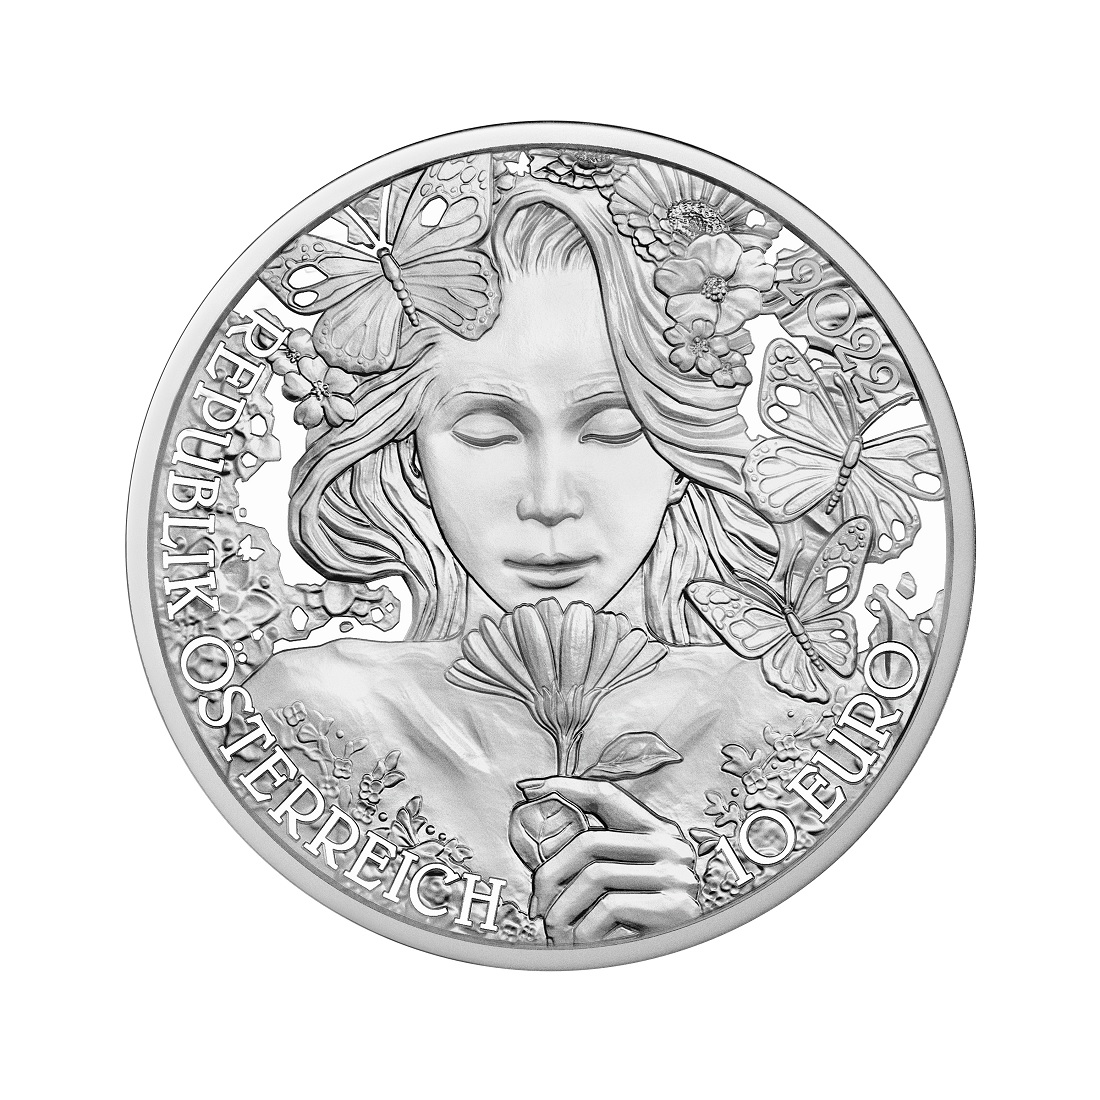 (EUR01.Proof.2022.25627) 10 euro Austria 2022 Proof silver - Marigold Obverse (zoom)